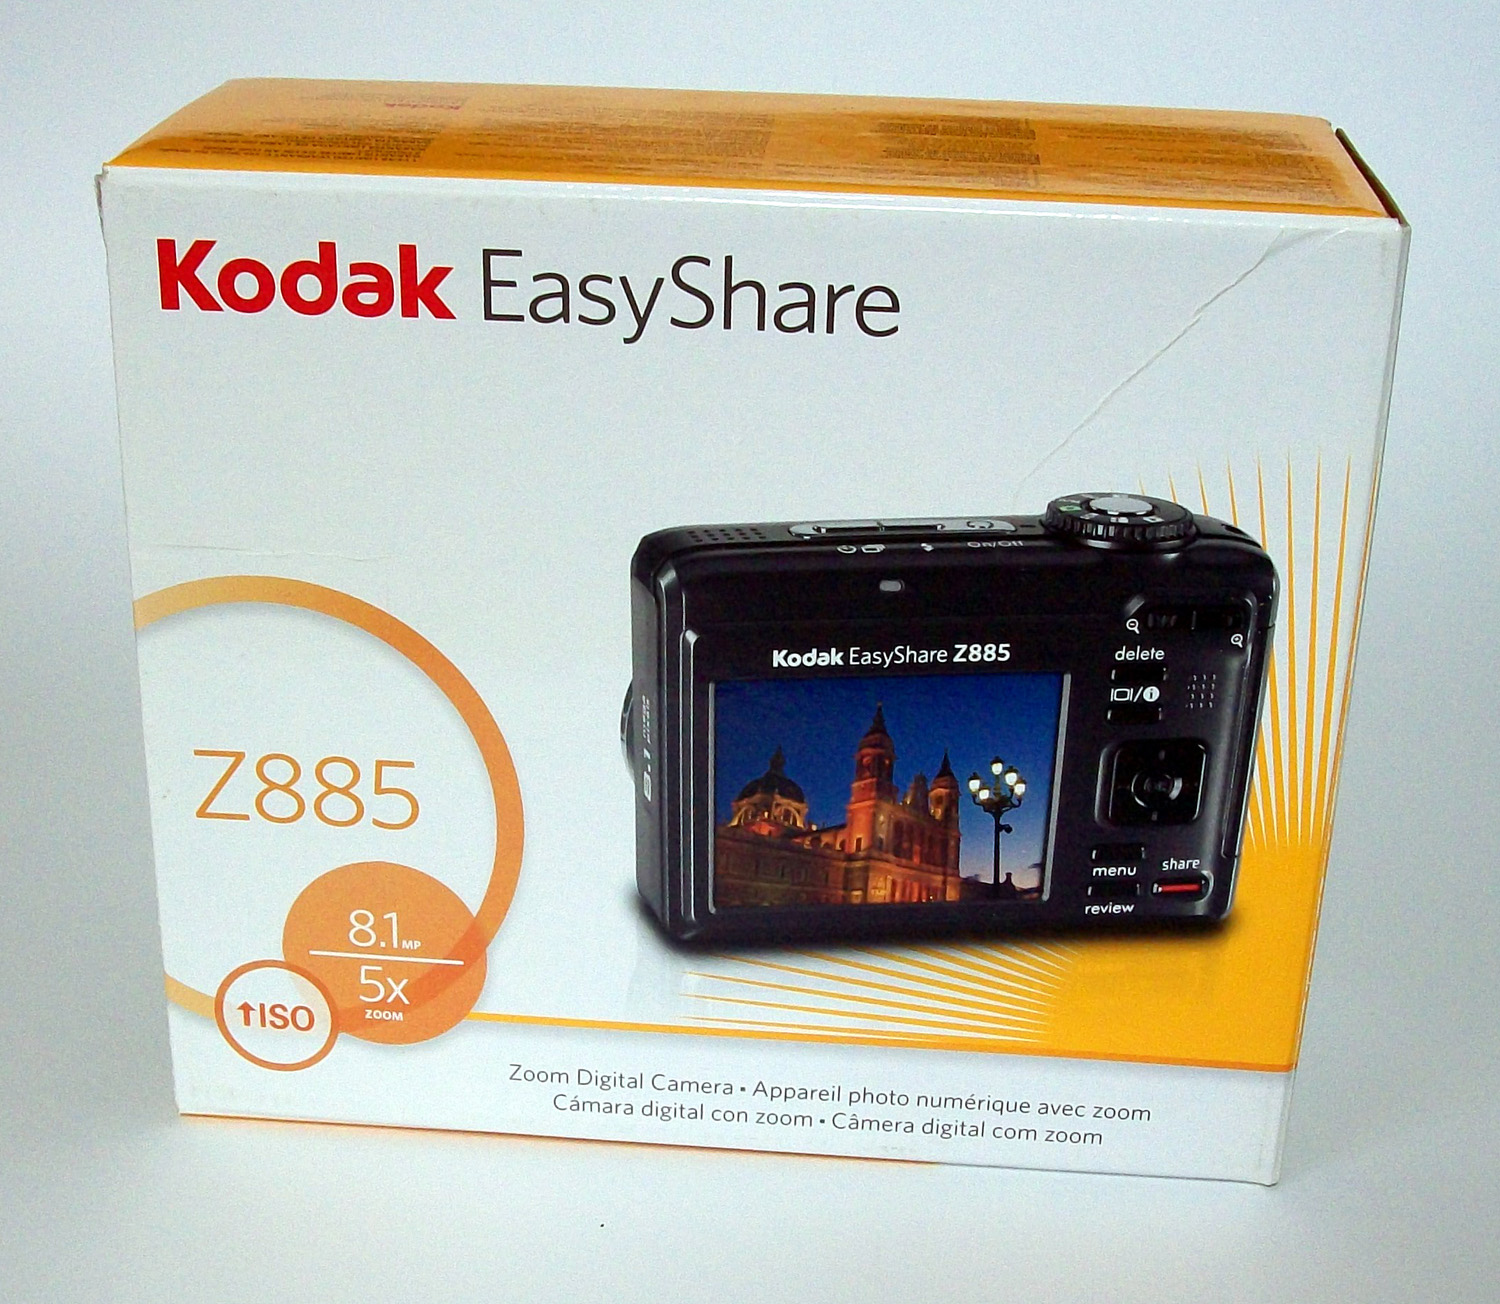 Kodak EasyShare Z885 digital camera